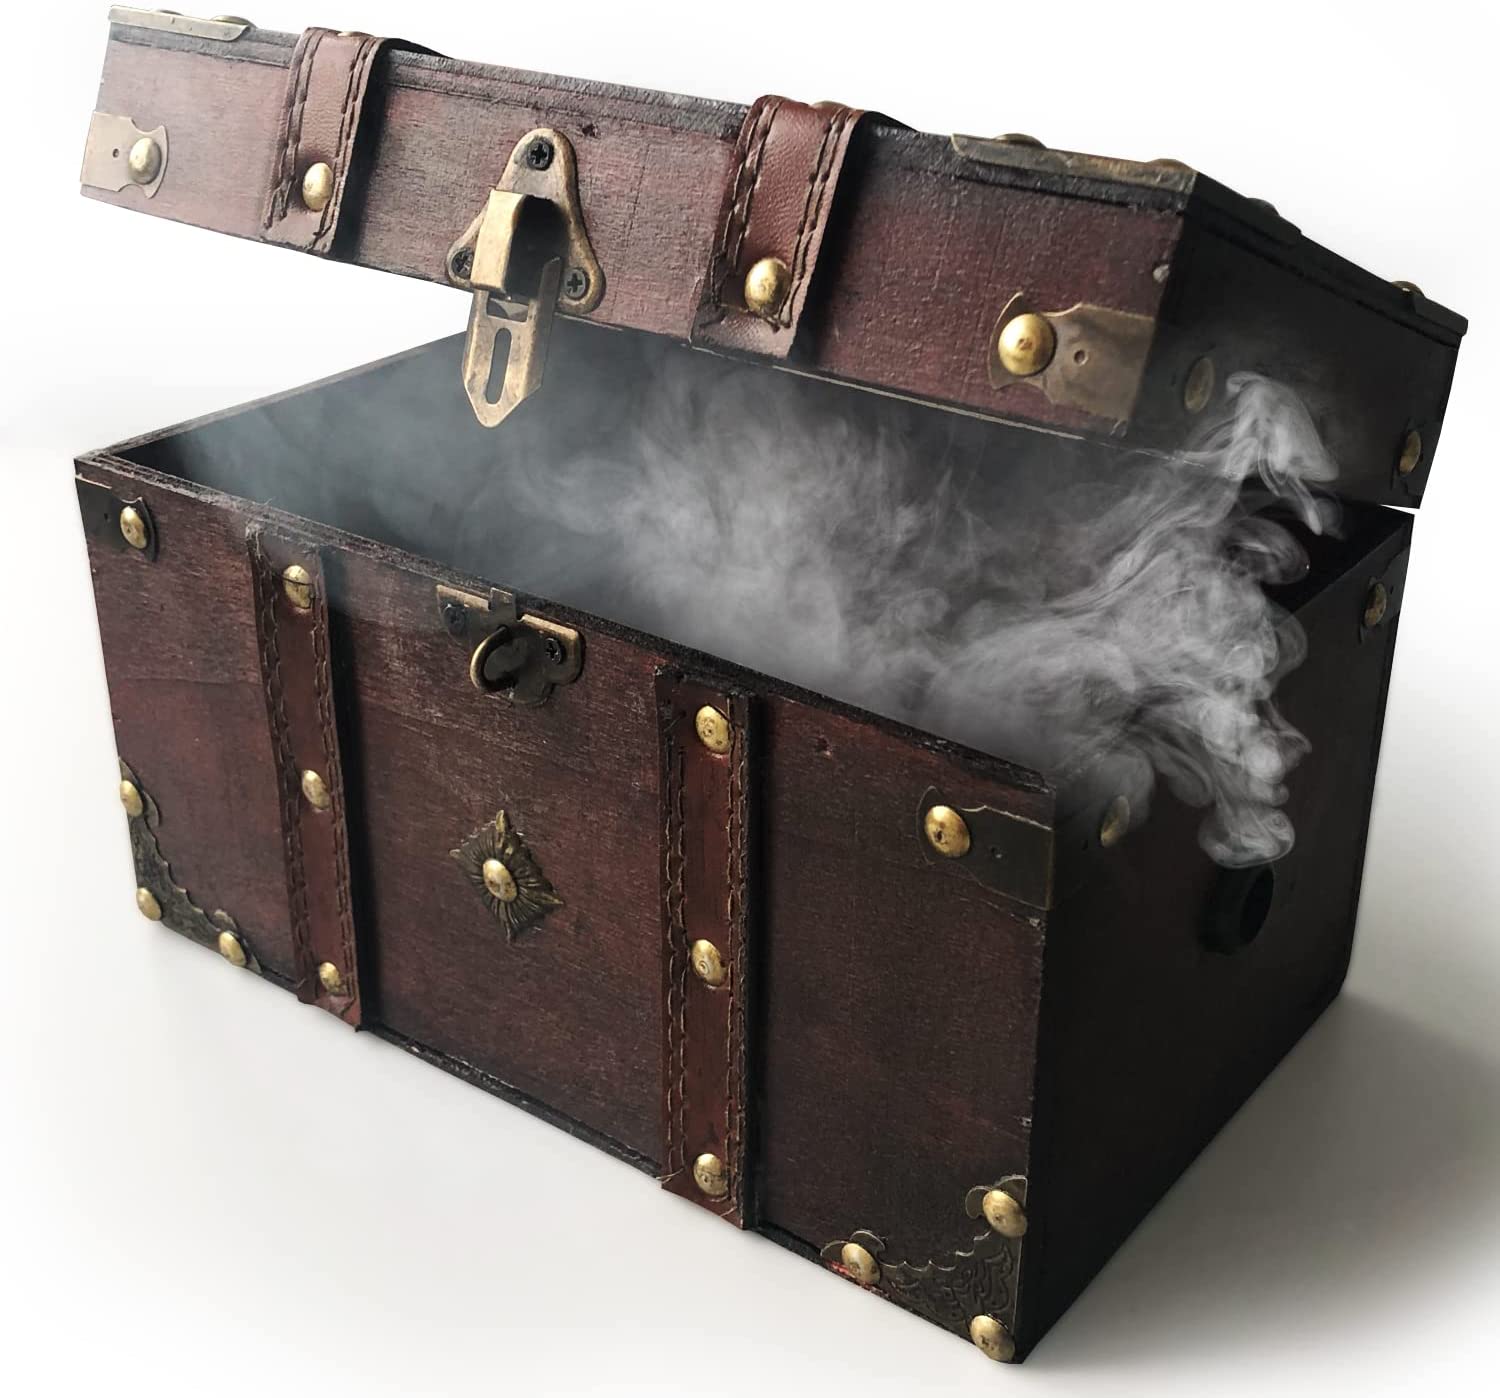 Wooden Smoking Box for Smoking infuser